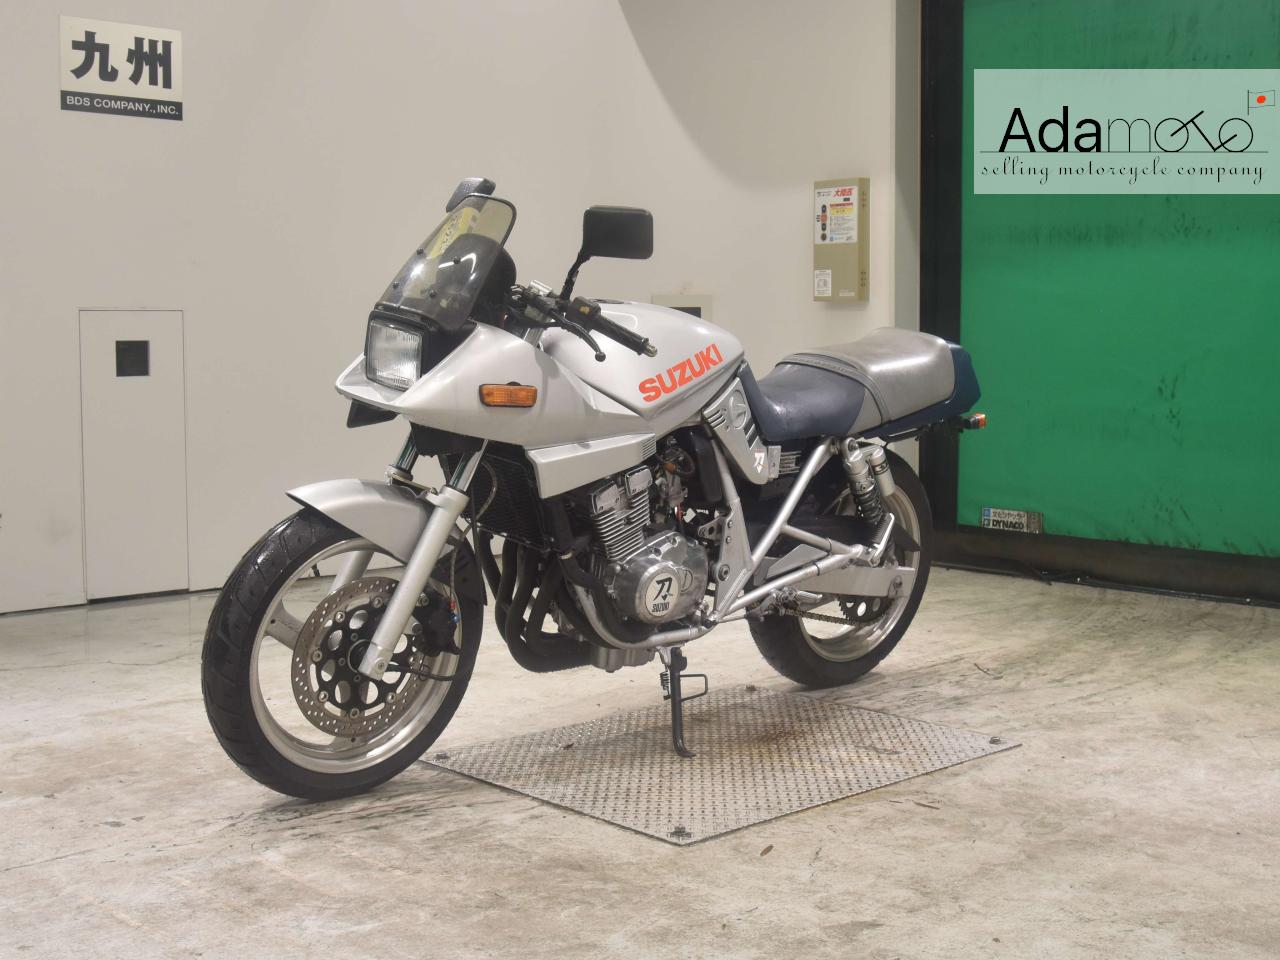 Suzuki GSX250S KATANA - Adamoto - Motorcycles from Japan